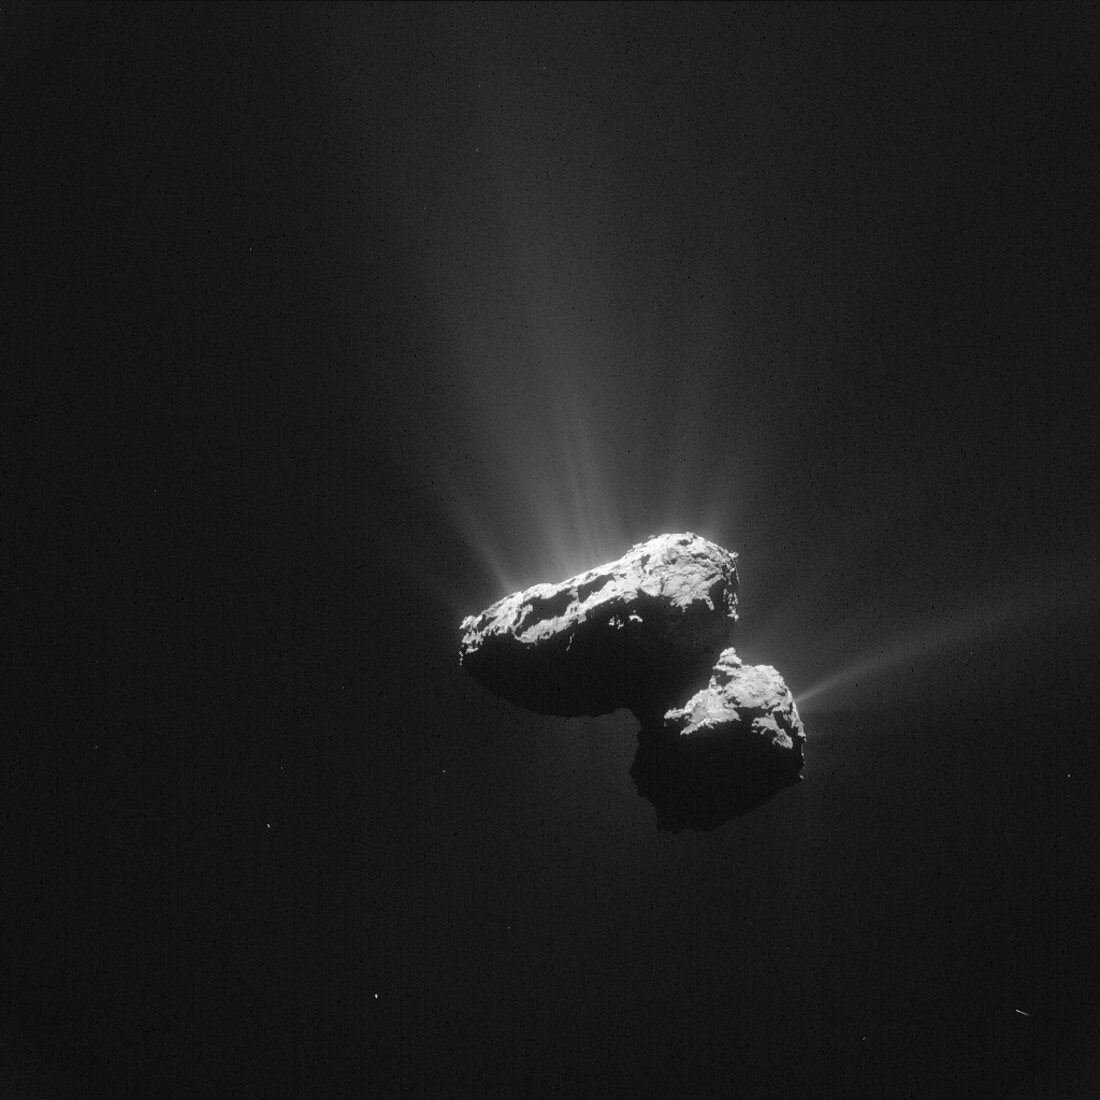 Comet Churyumov-Gerasimenko,July 2015